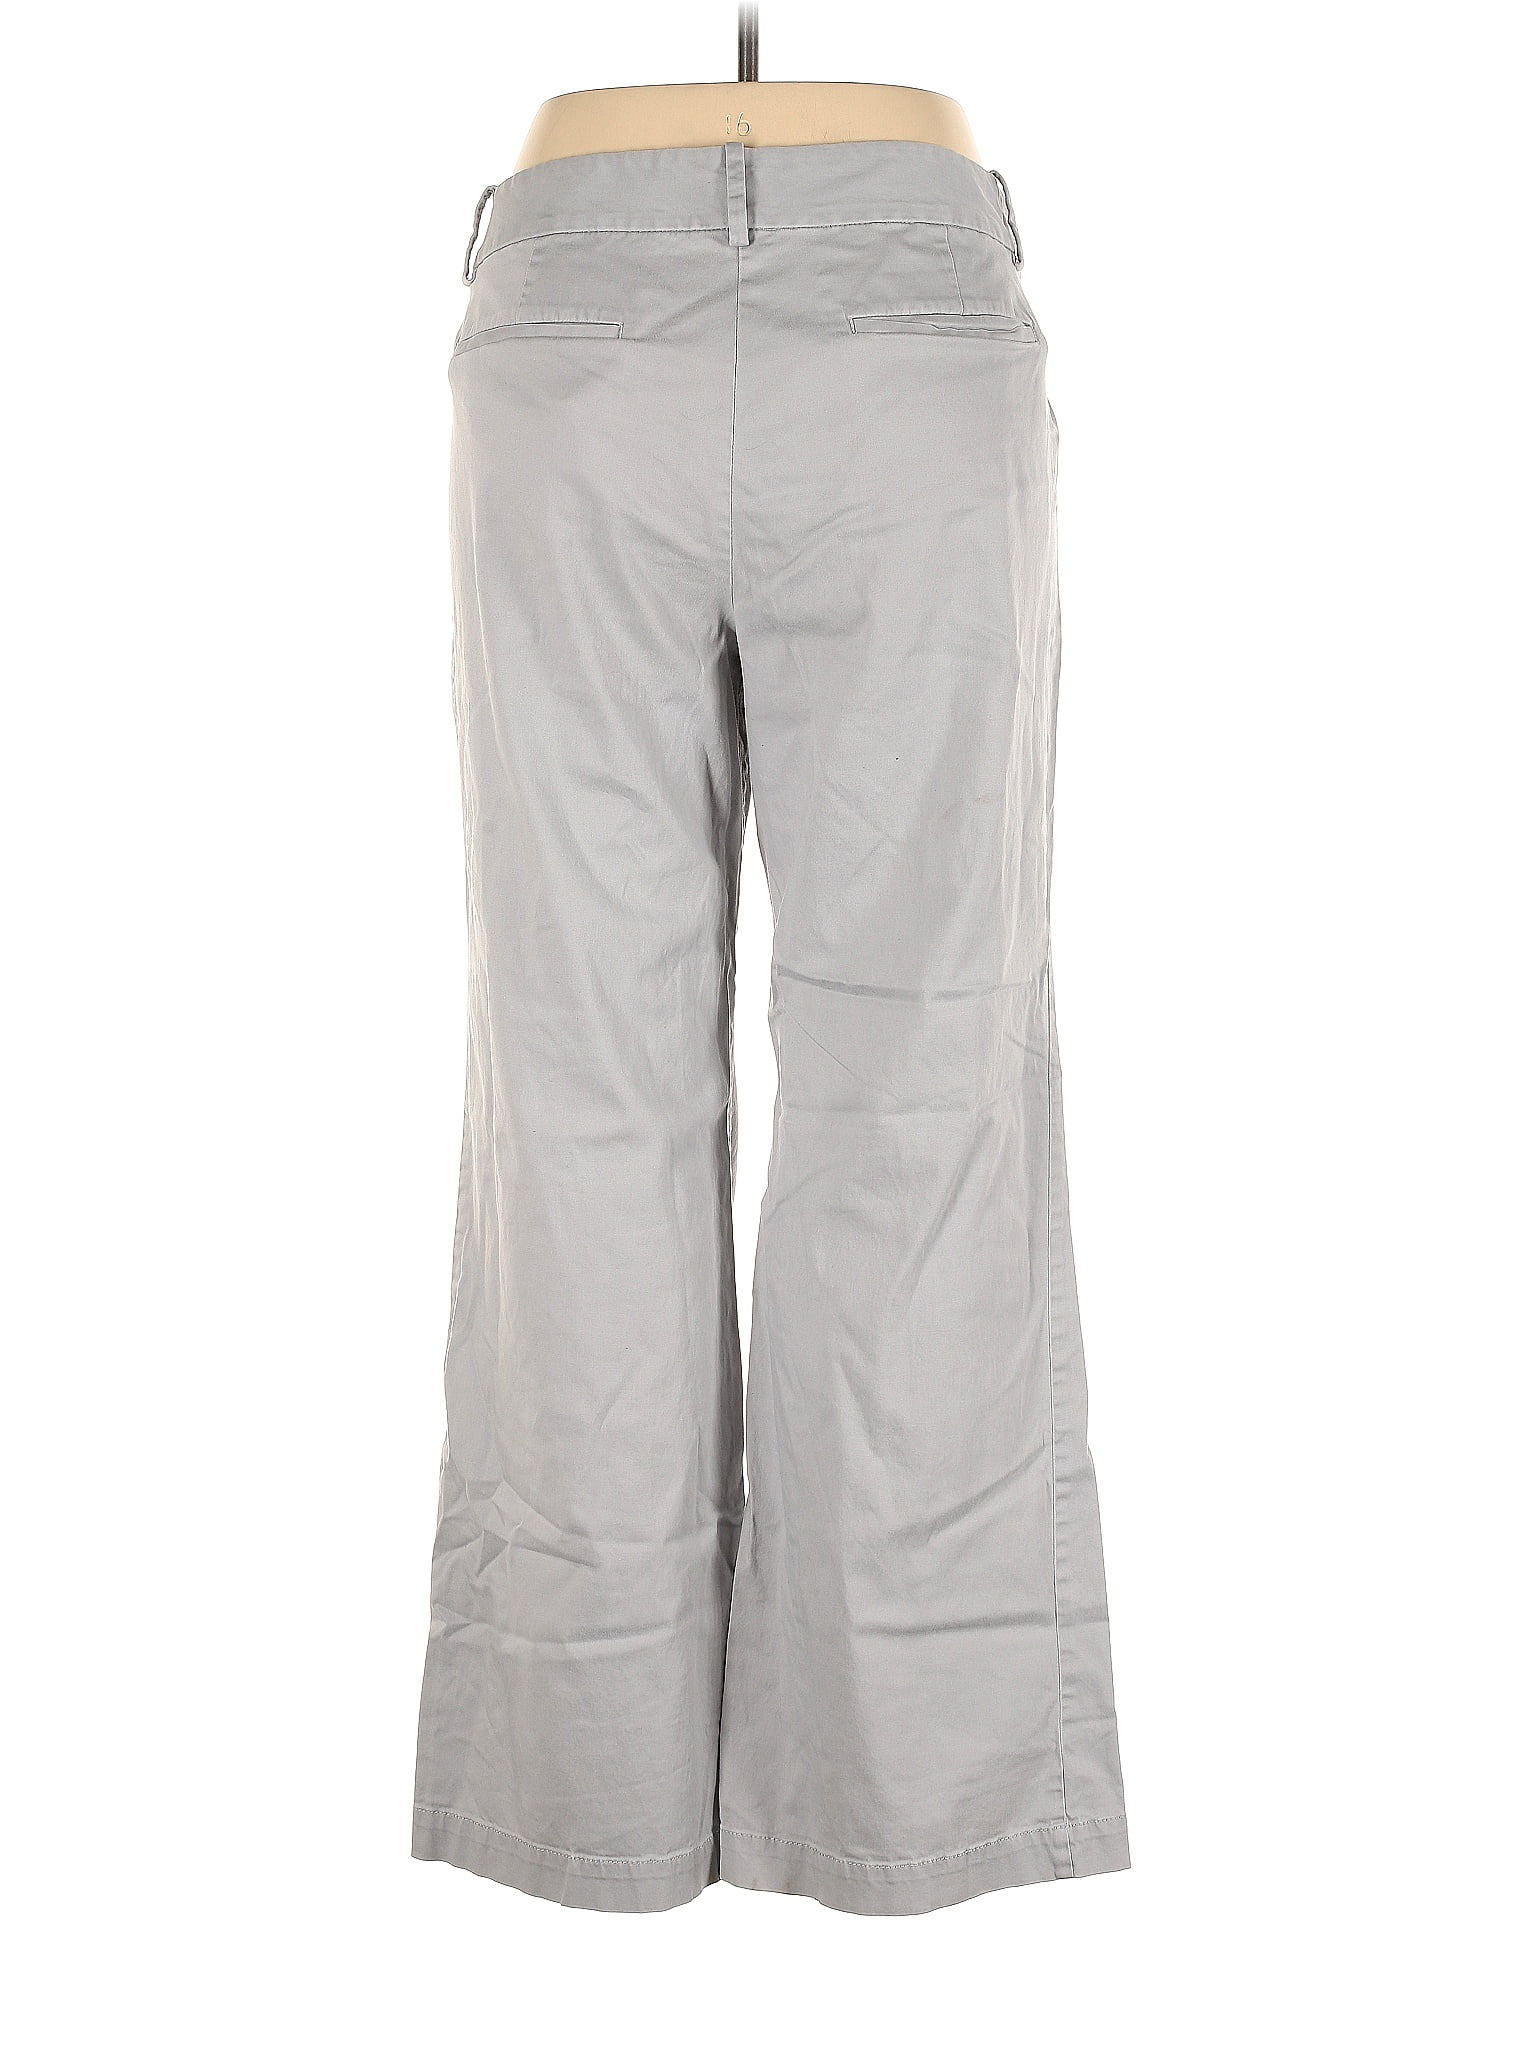 Ann Taylor LOFT Outlet Solid Gray Dress Pants Size 16 - 56% off